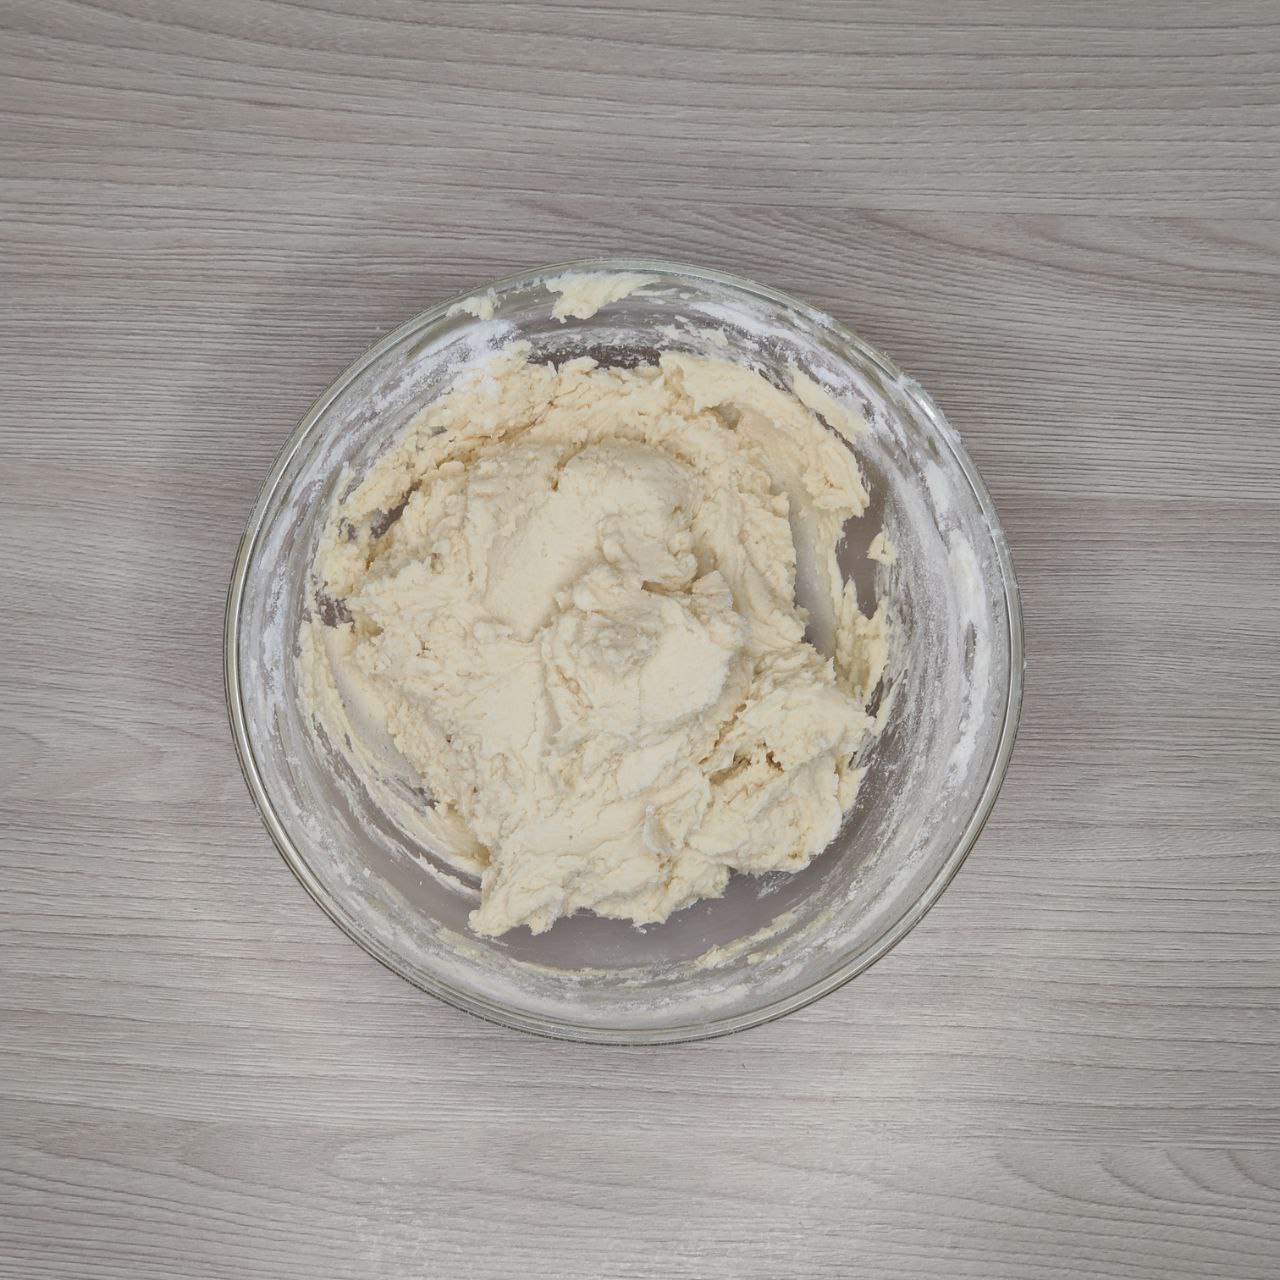 масляное печенье без яиц с кукурузным крахмалом – 6 шаг